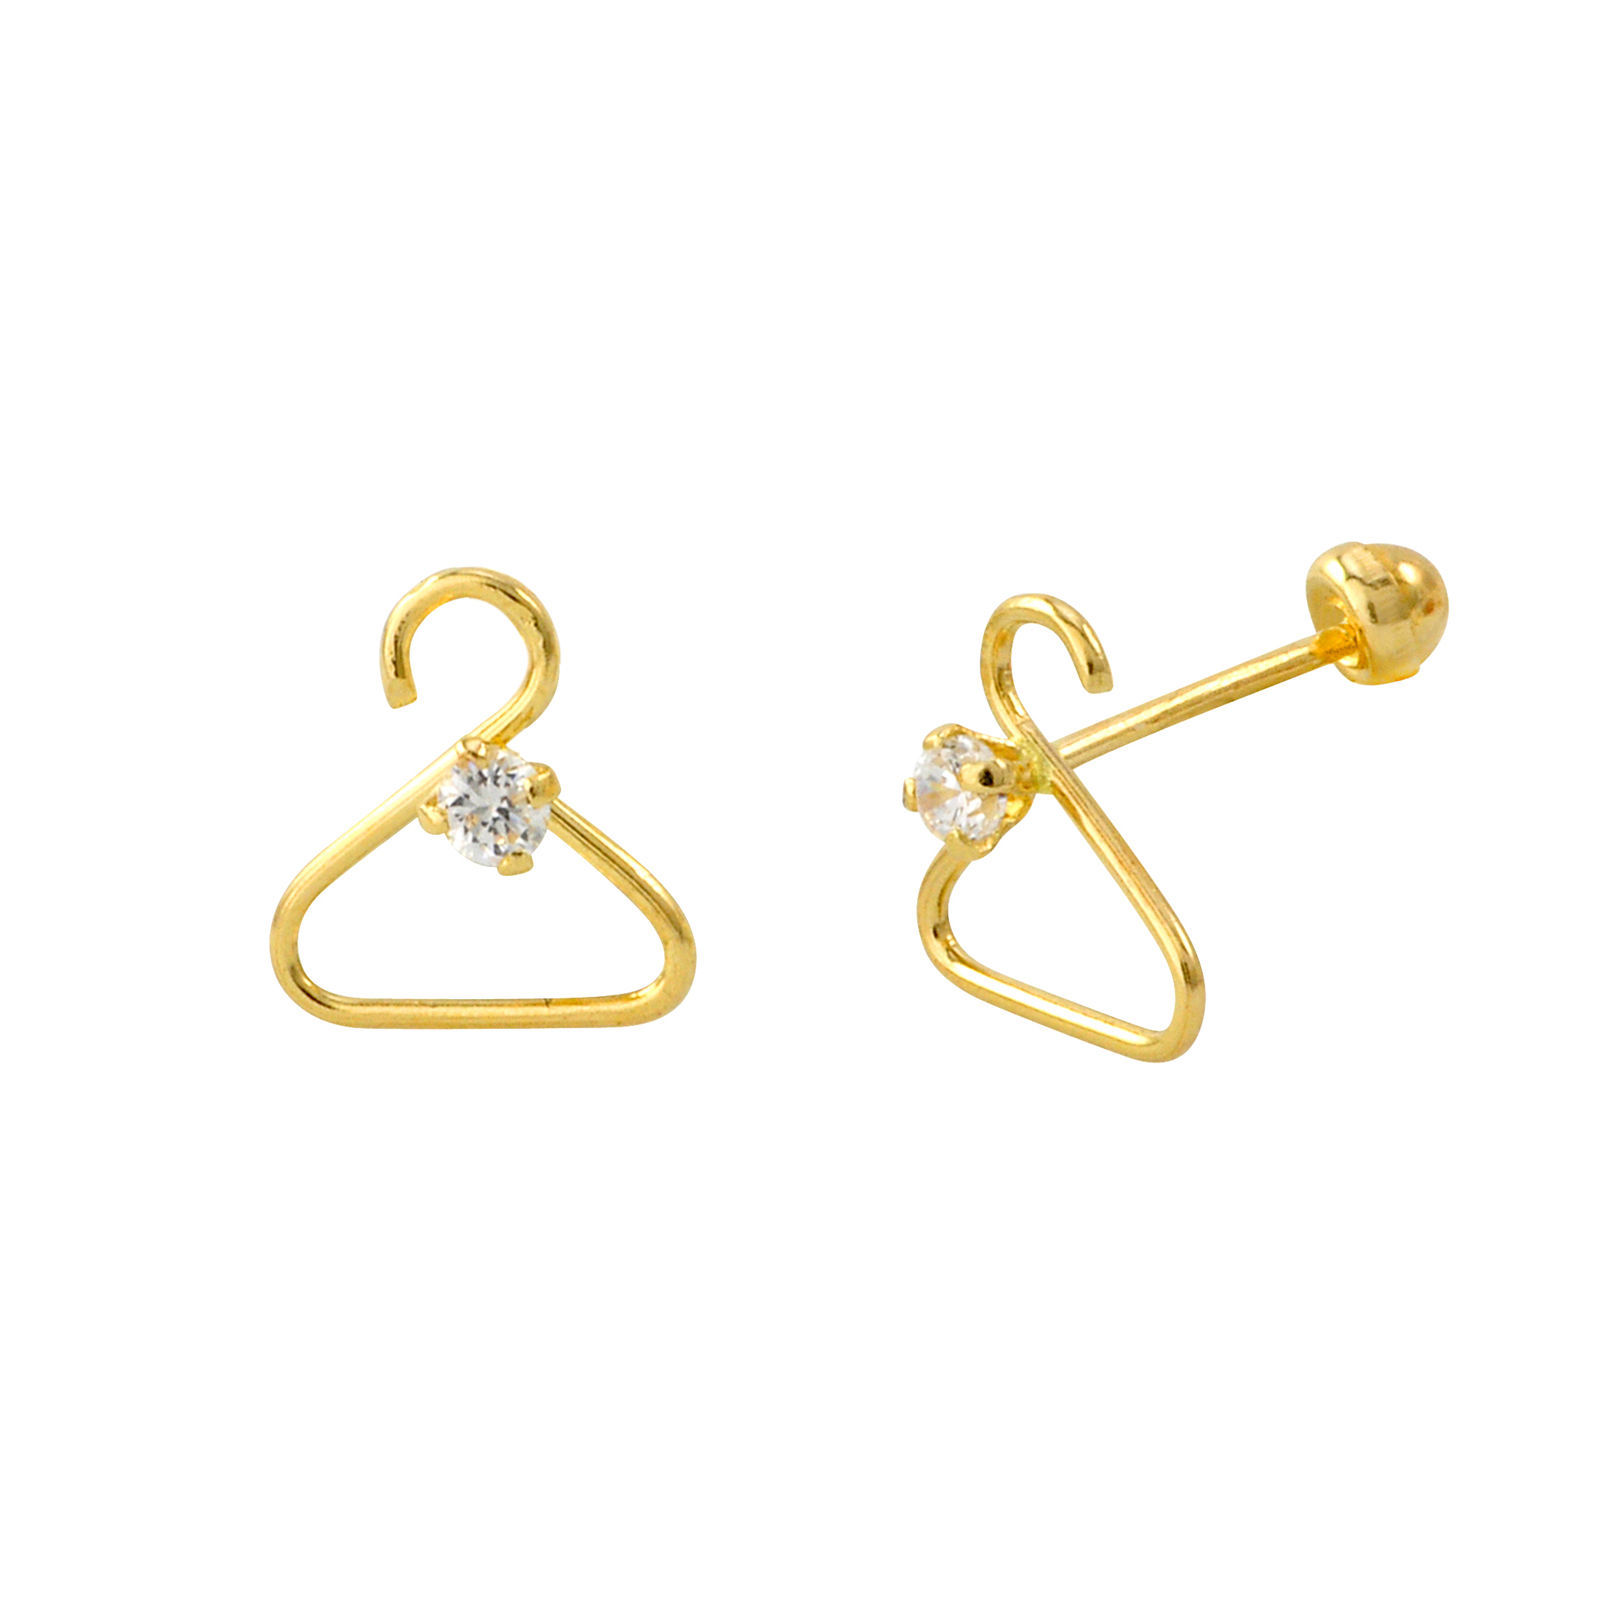 Coat Hanger Earrings 10k Yellow Gold with Screwbacks 8x8 - $24.91